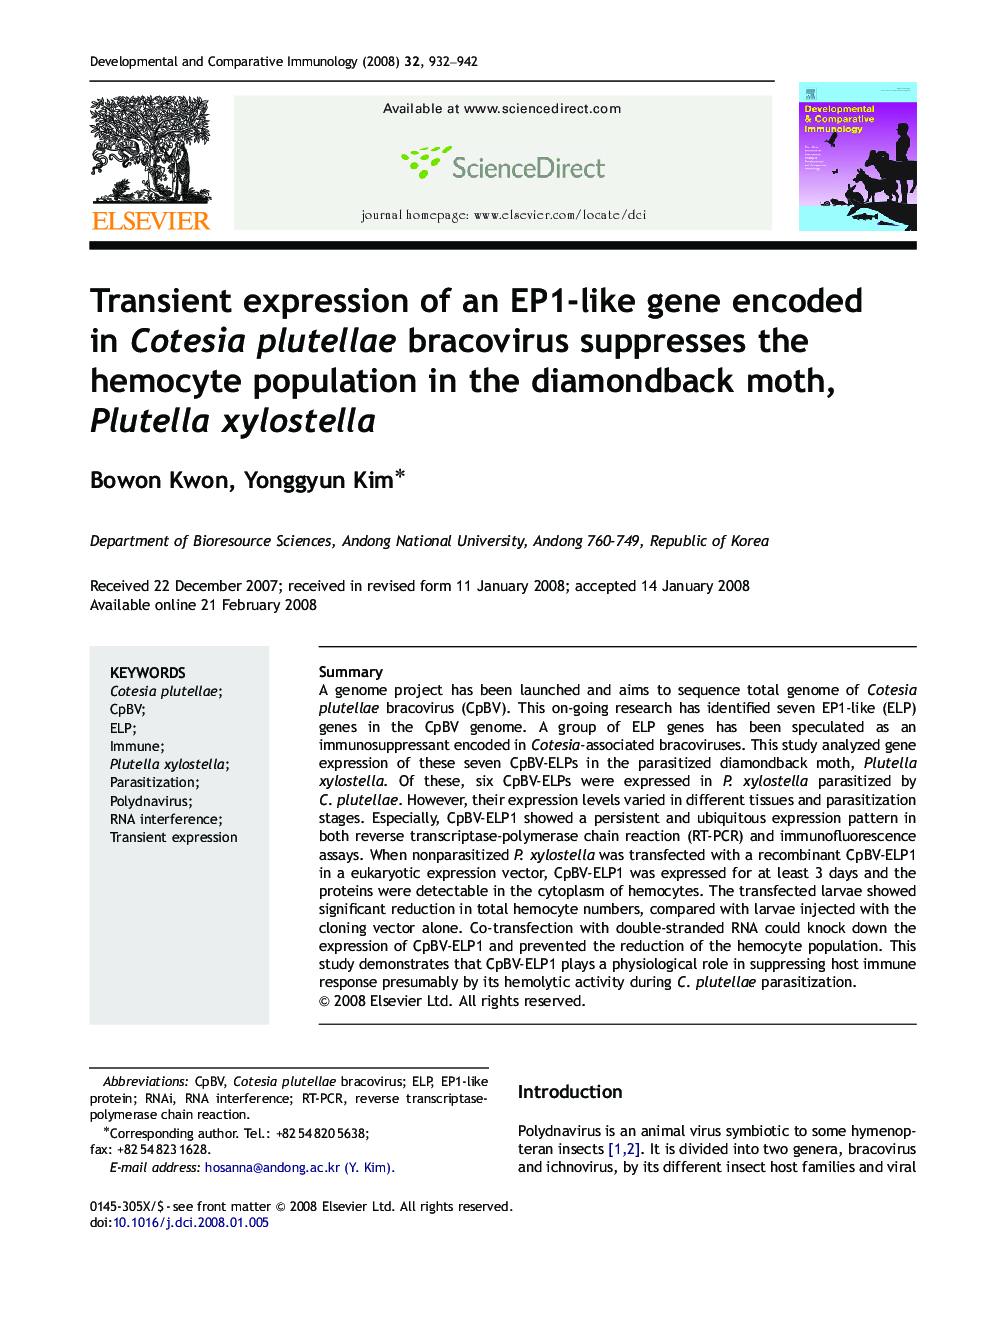 Transient expression of an EP1-like gene encoded in Cotesia plutellae bracovirus suppresses the hemocyte population in the diamondback moth, Plutella xylostella